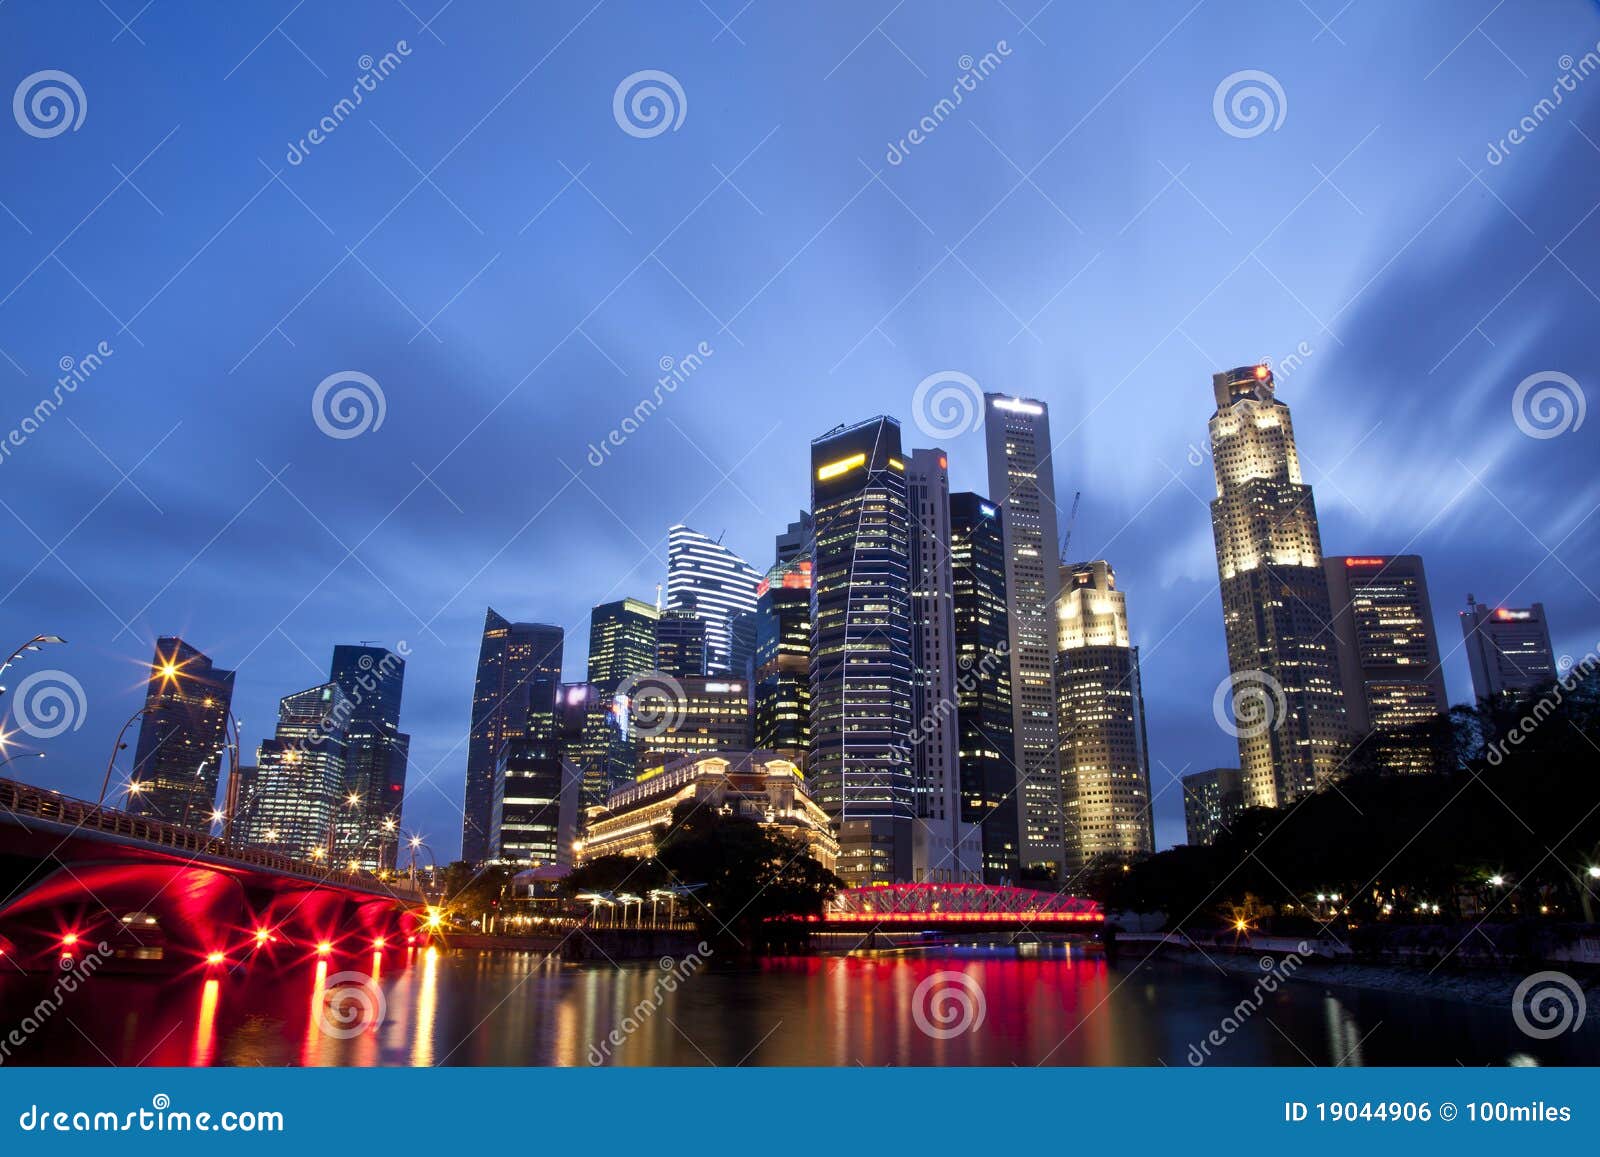 singapore night cityscape